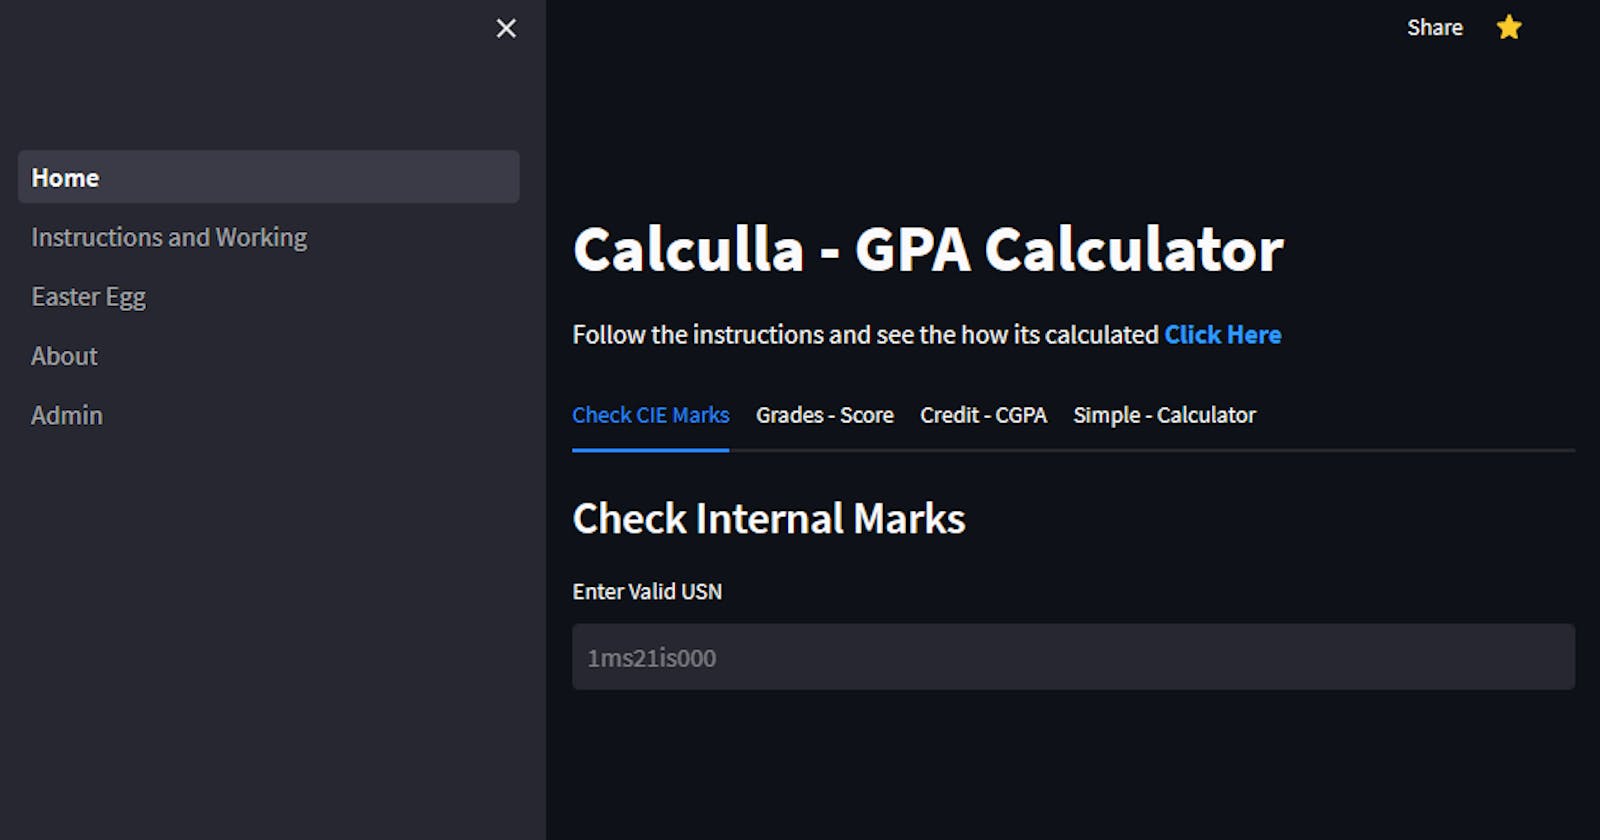 Calculla: The Over-Engineered GPA Calculator